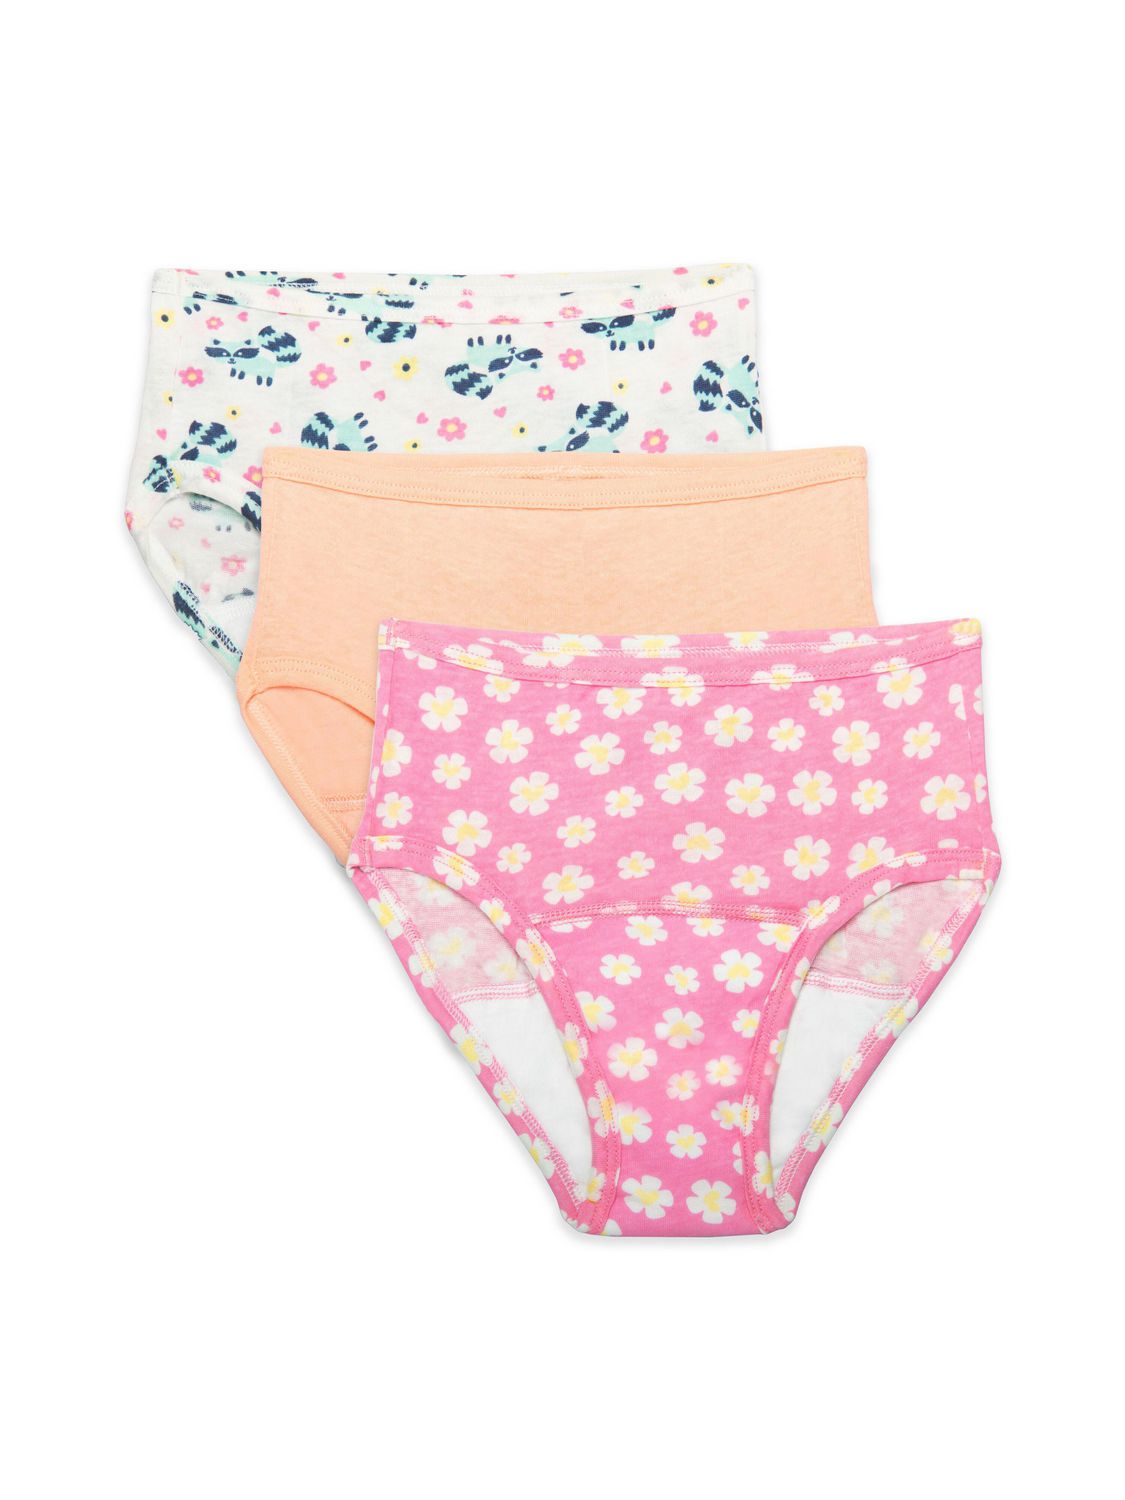 Joyo roy Toddler Training Underwear Training Underwear for Girls